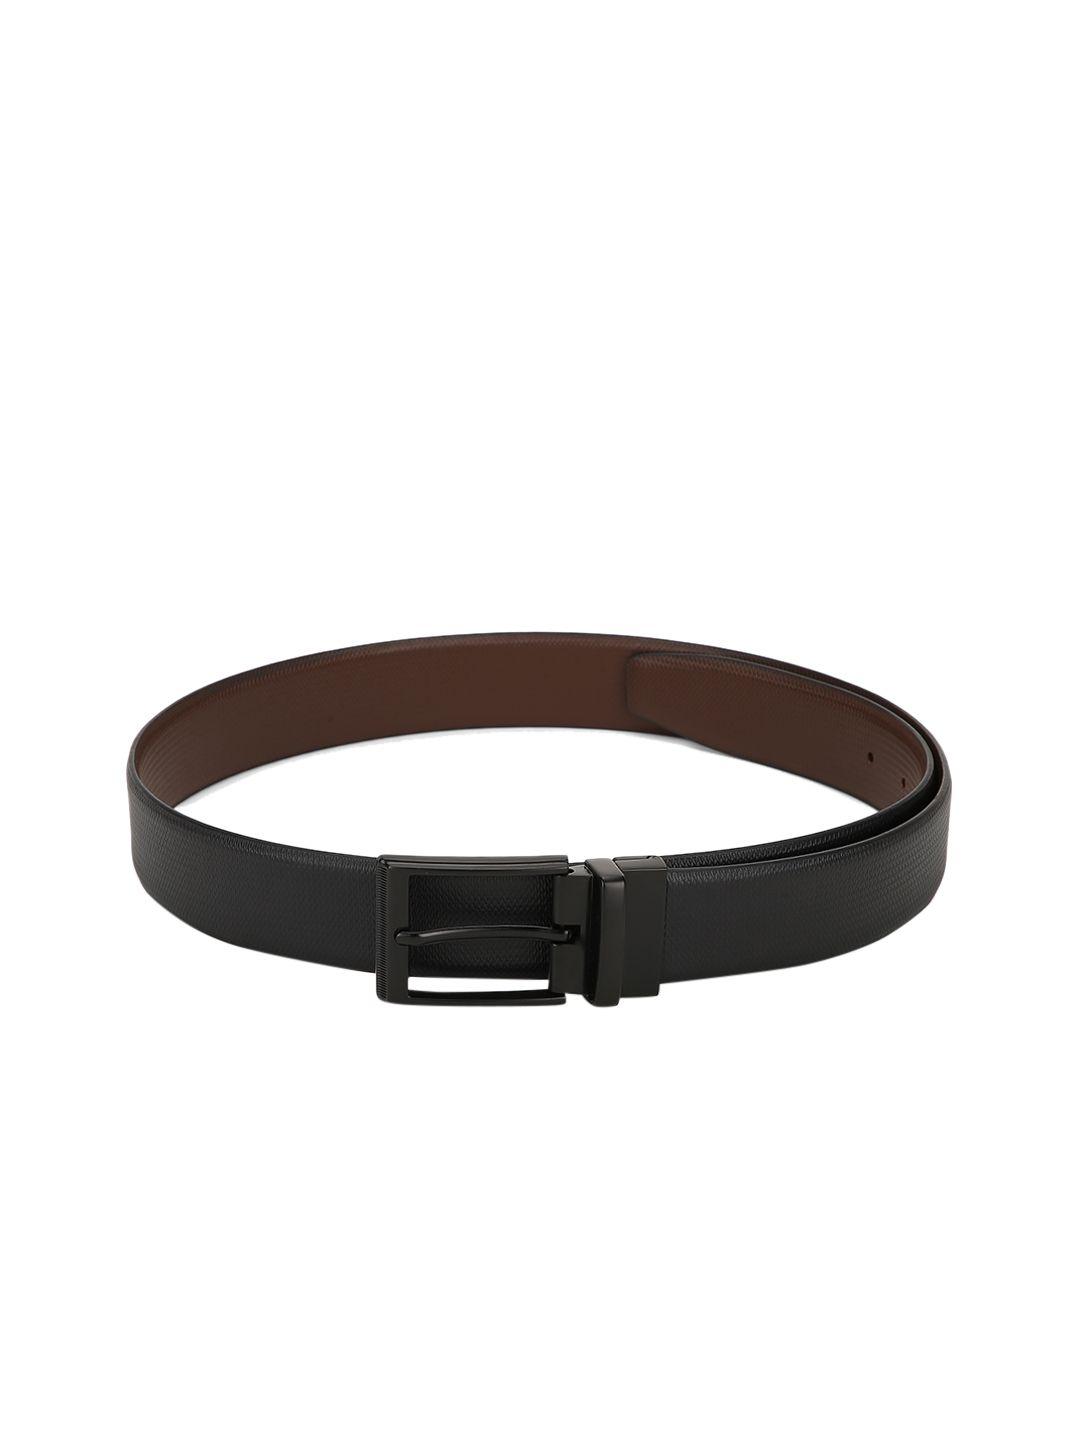 teakwood leathers men black & brown solid reversible leather belt